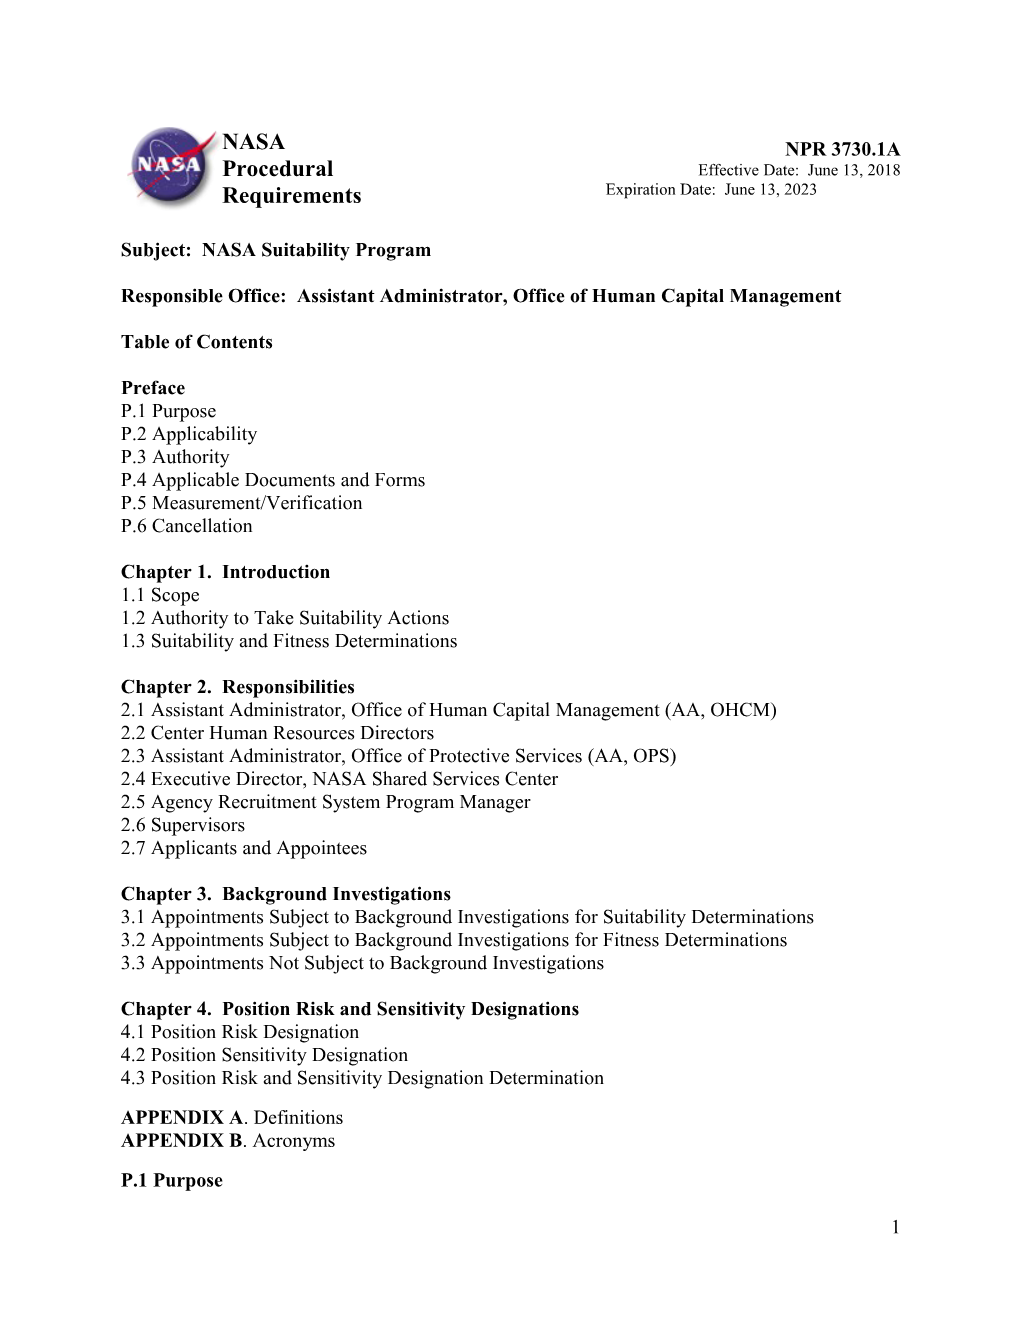 Subject: NASA Suitability Program